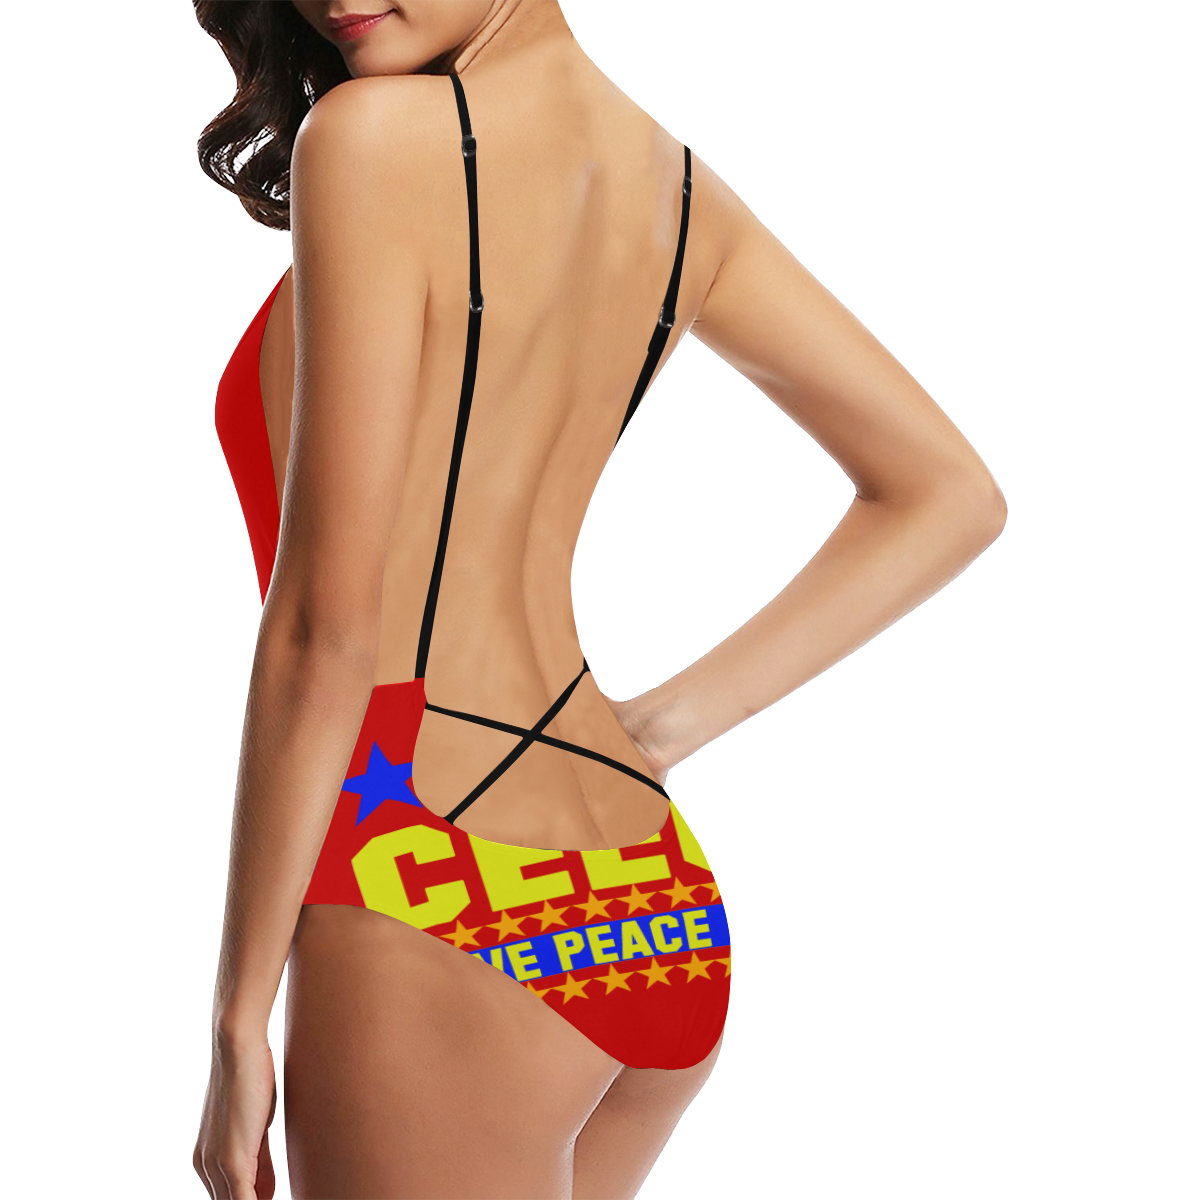 Ras CeeGo orangeblueyellow Sexy Lacing Backless One-Piece Swimsuit (Model S10)